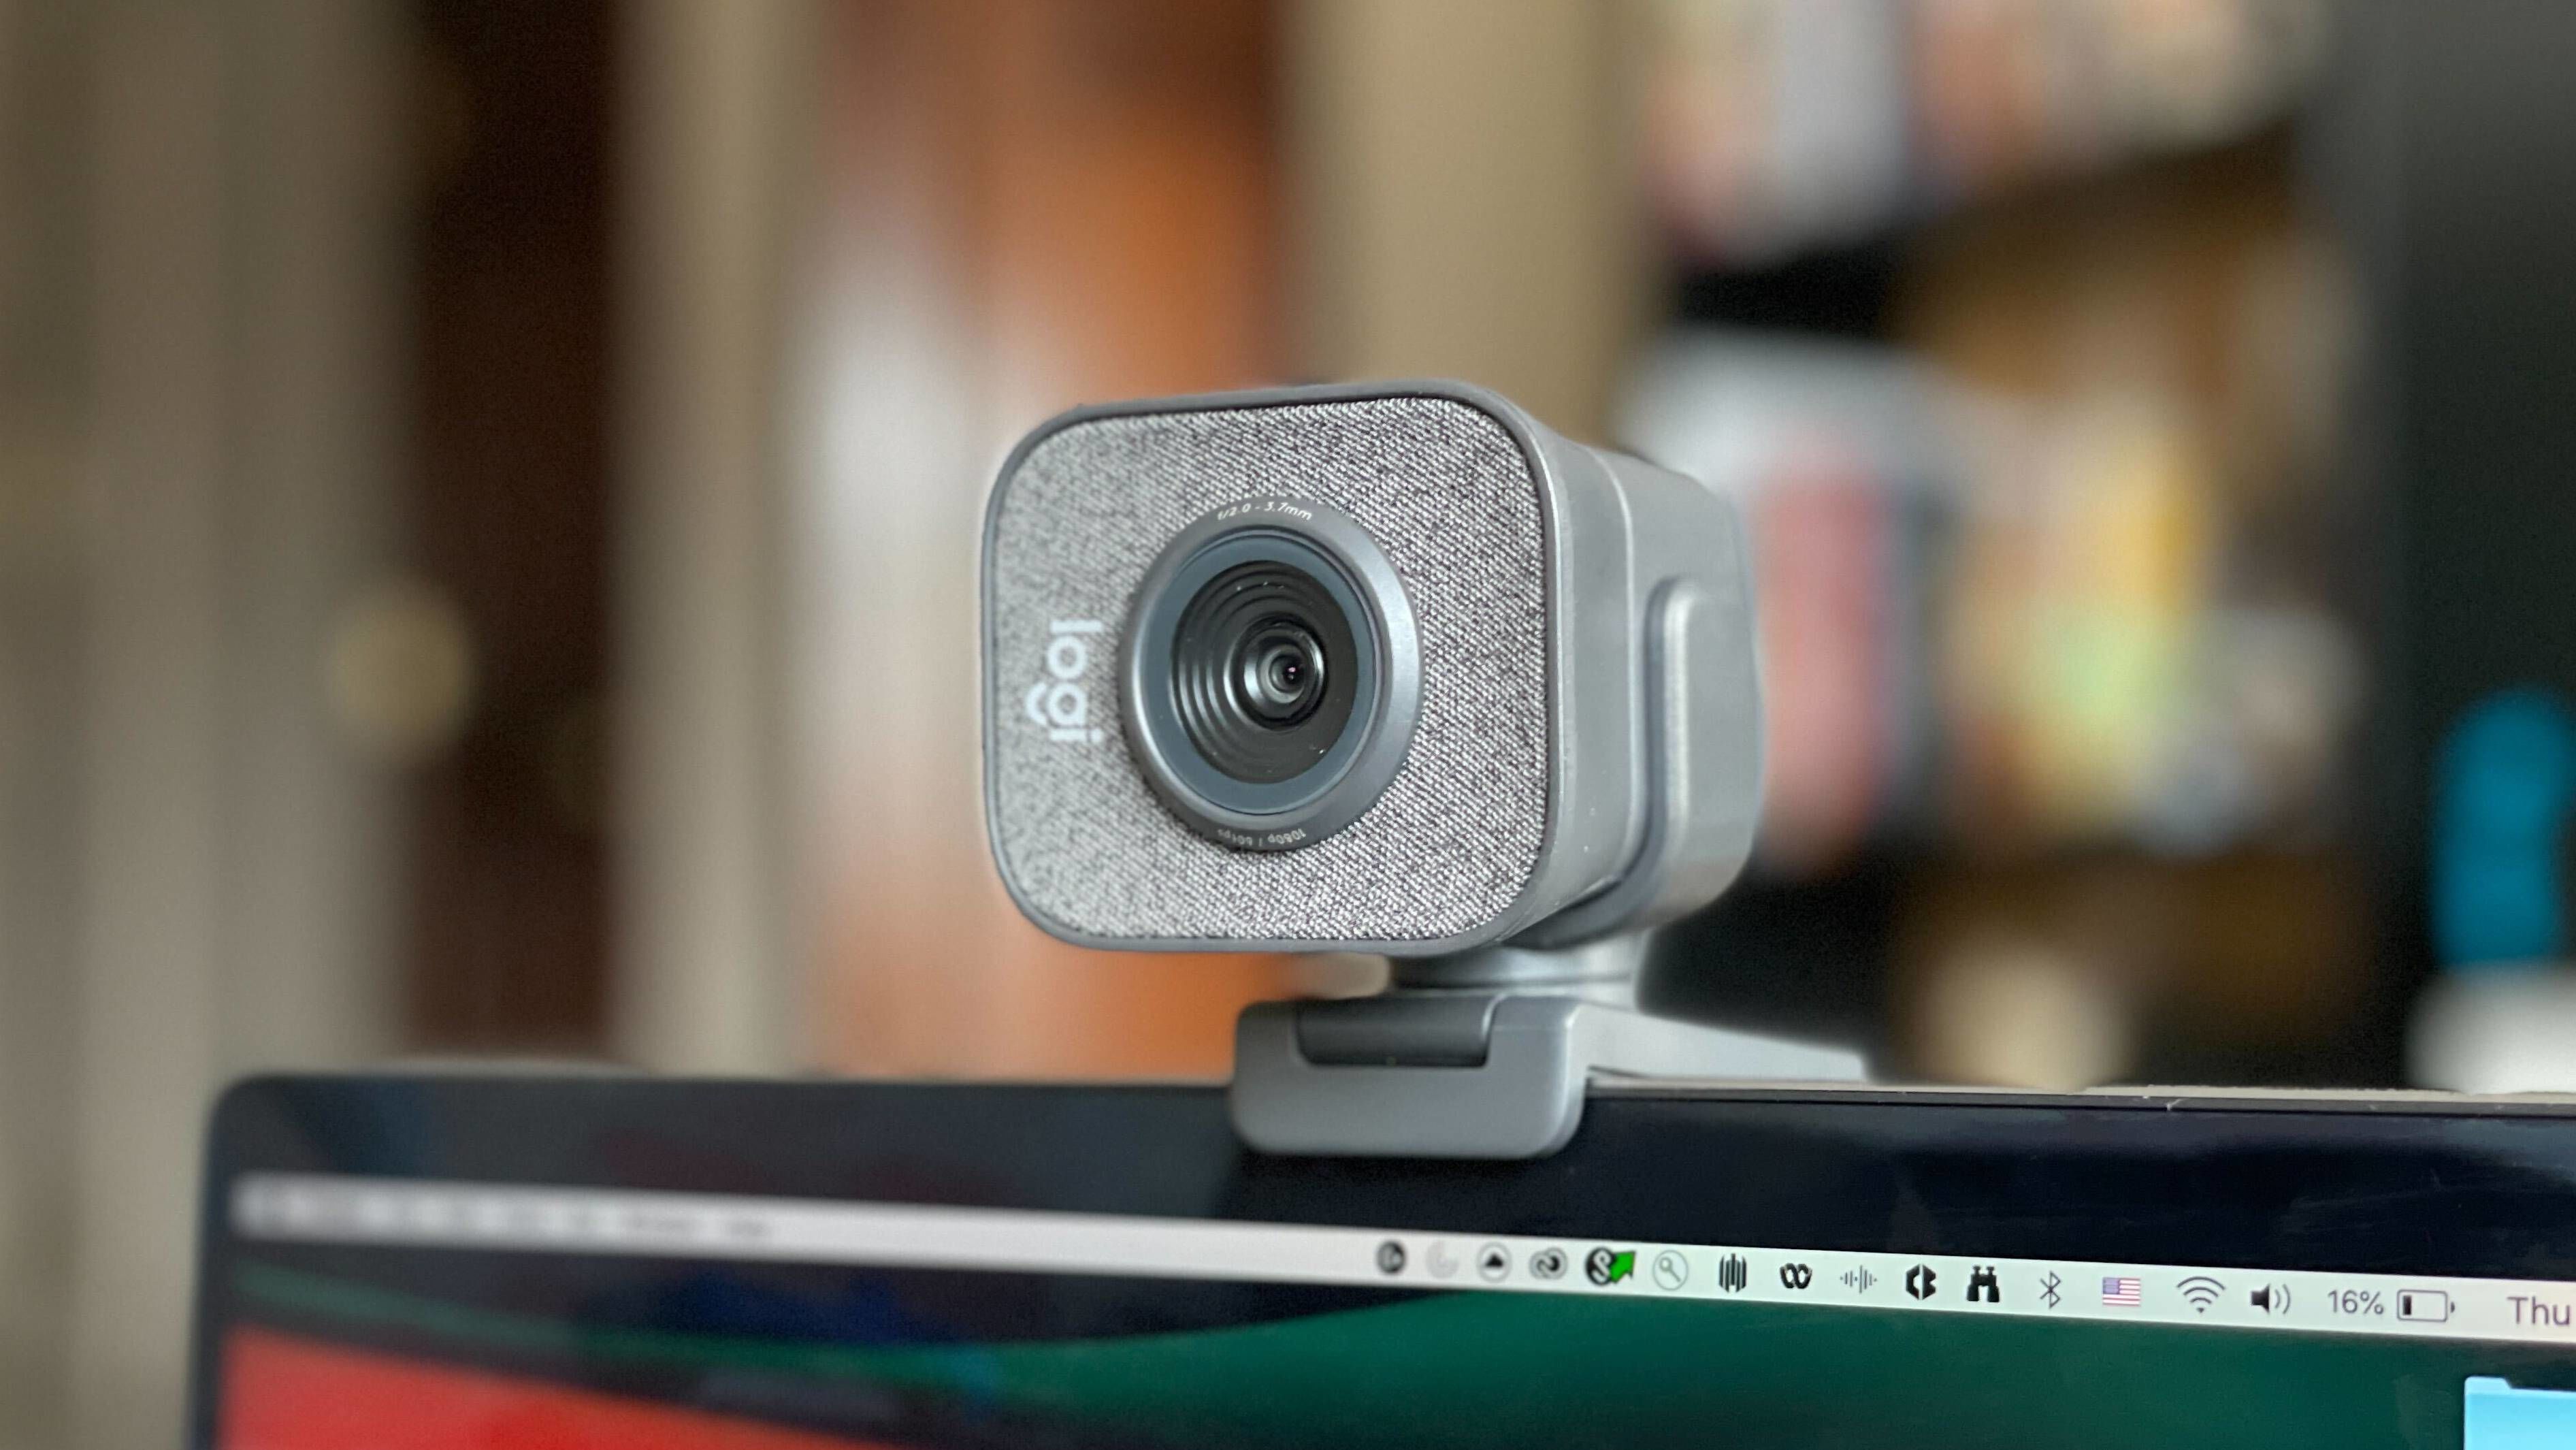 The BEST 4K webcam - welcome to Logitech Brio 